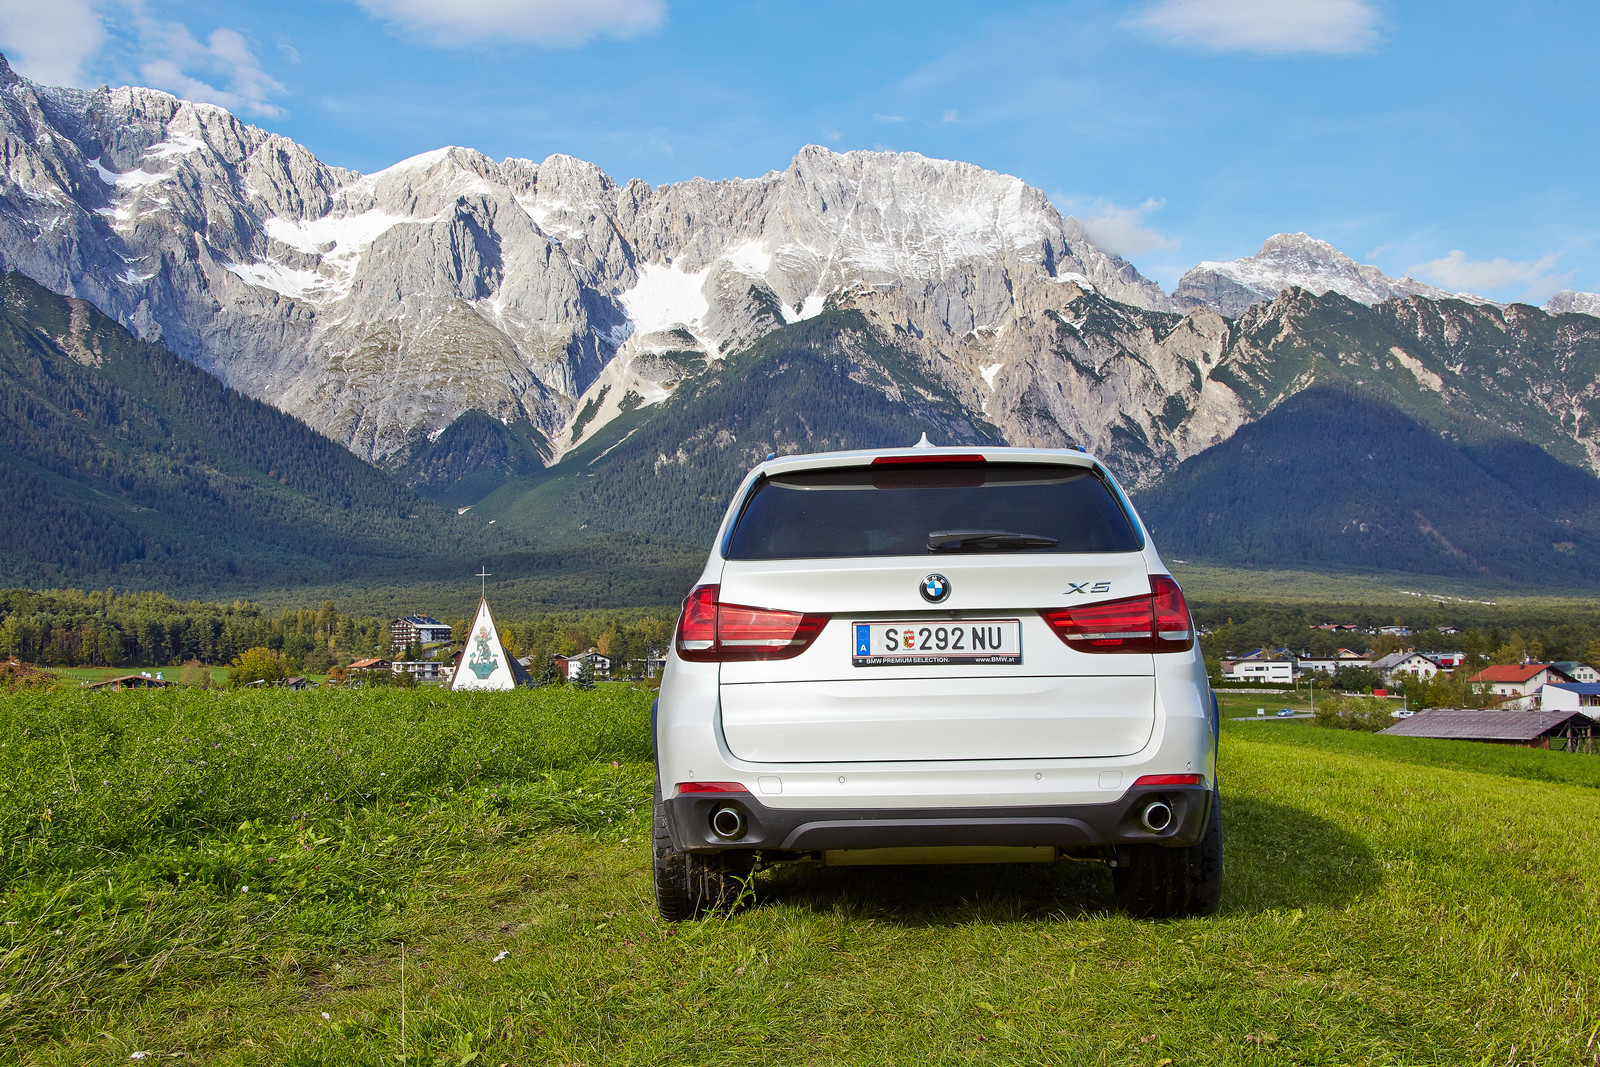 BMW X5 2013 test rear view